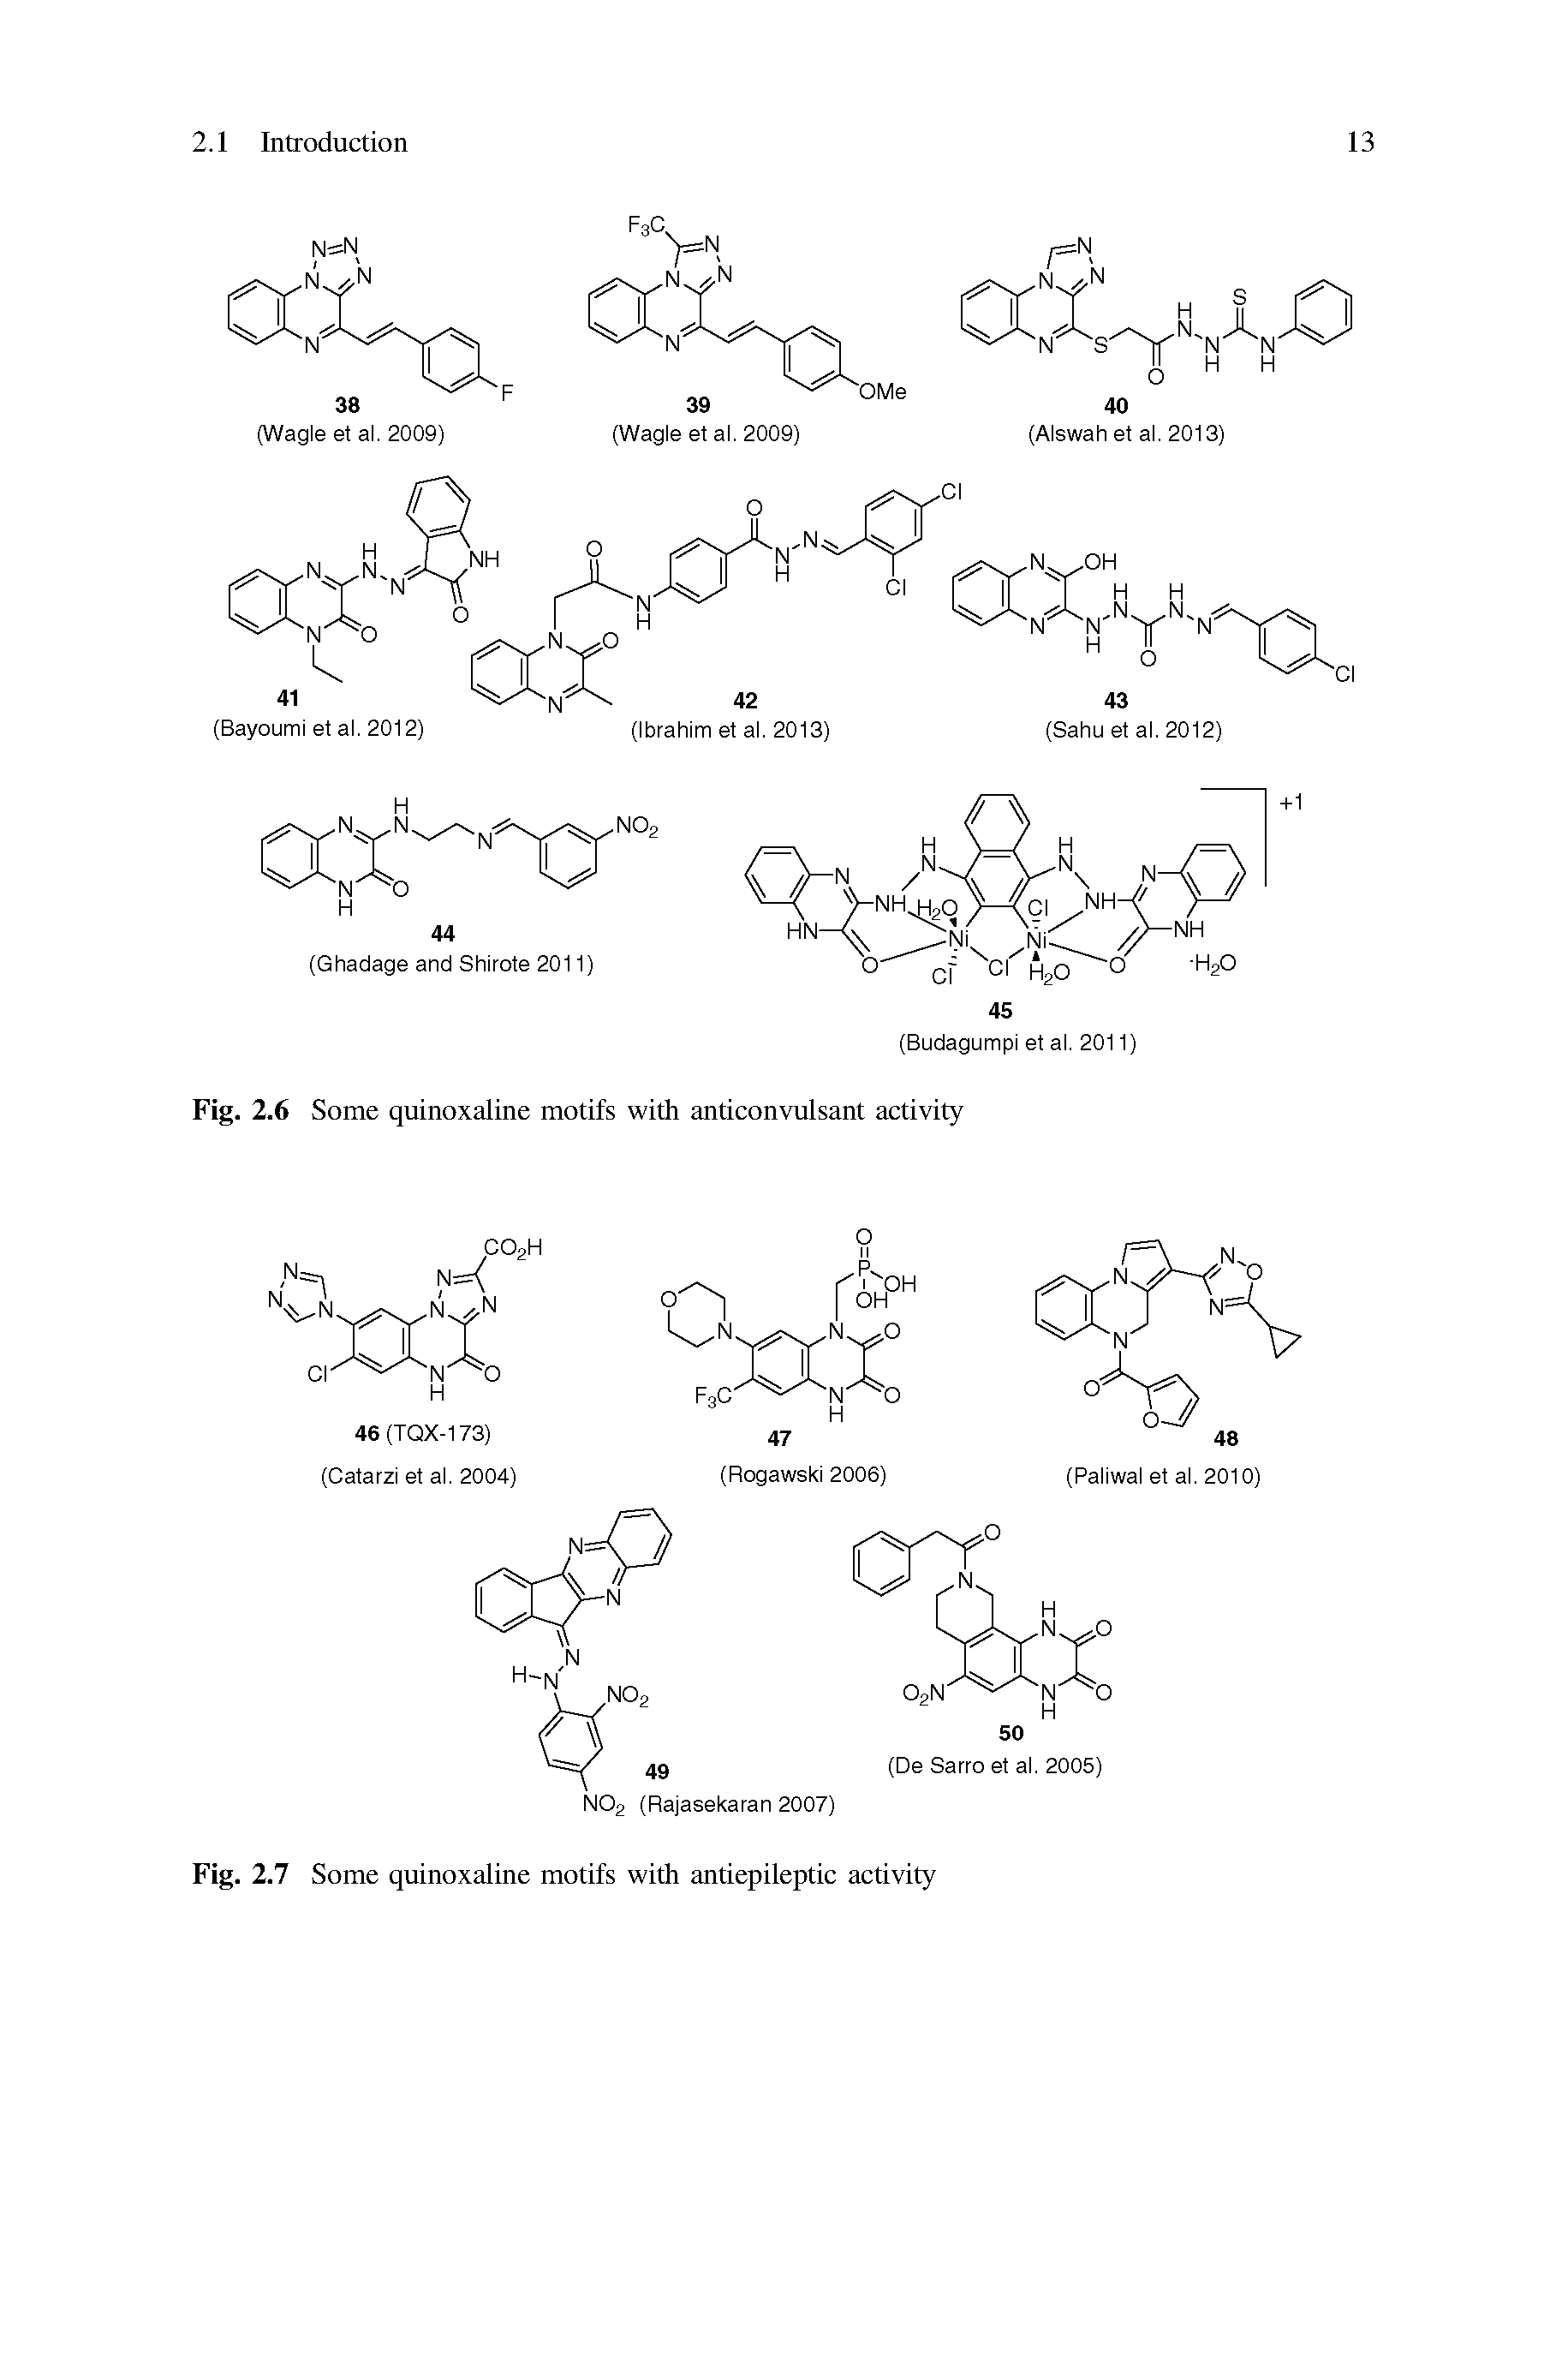 Fig. 2.7 Some quinoxaline motifs with antiepileptic activity...